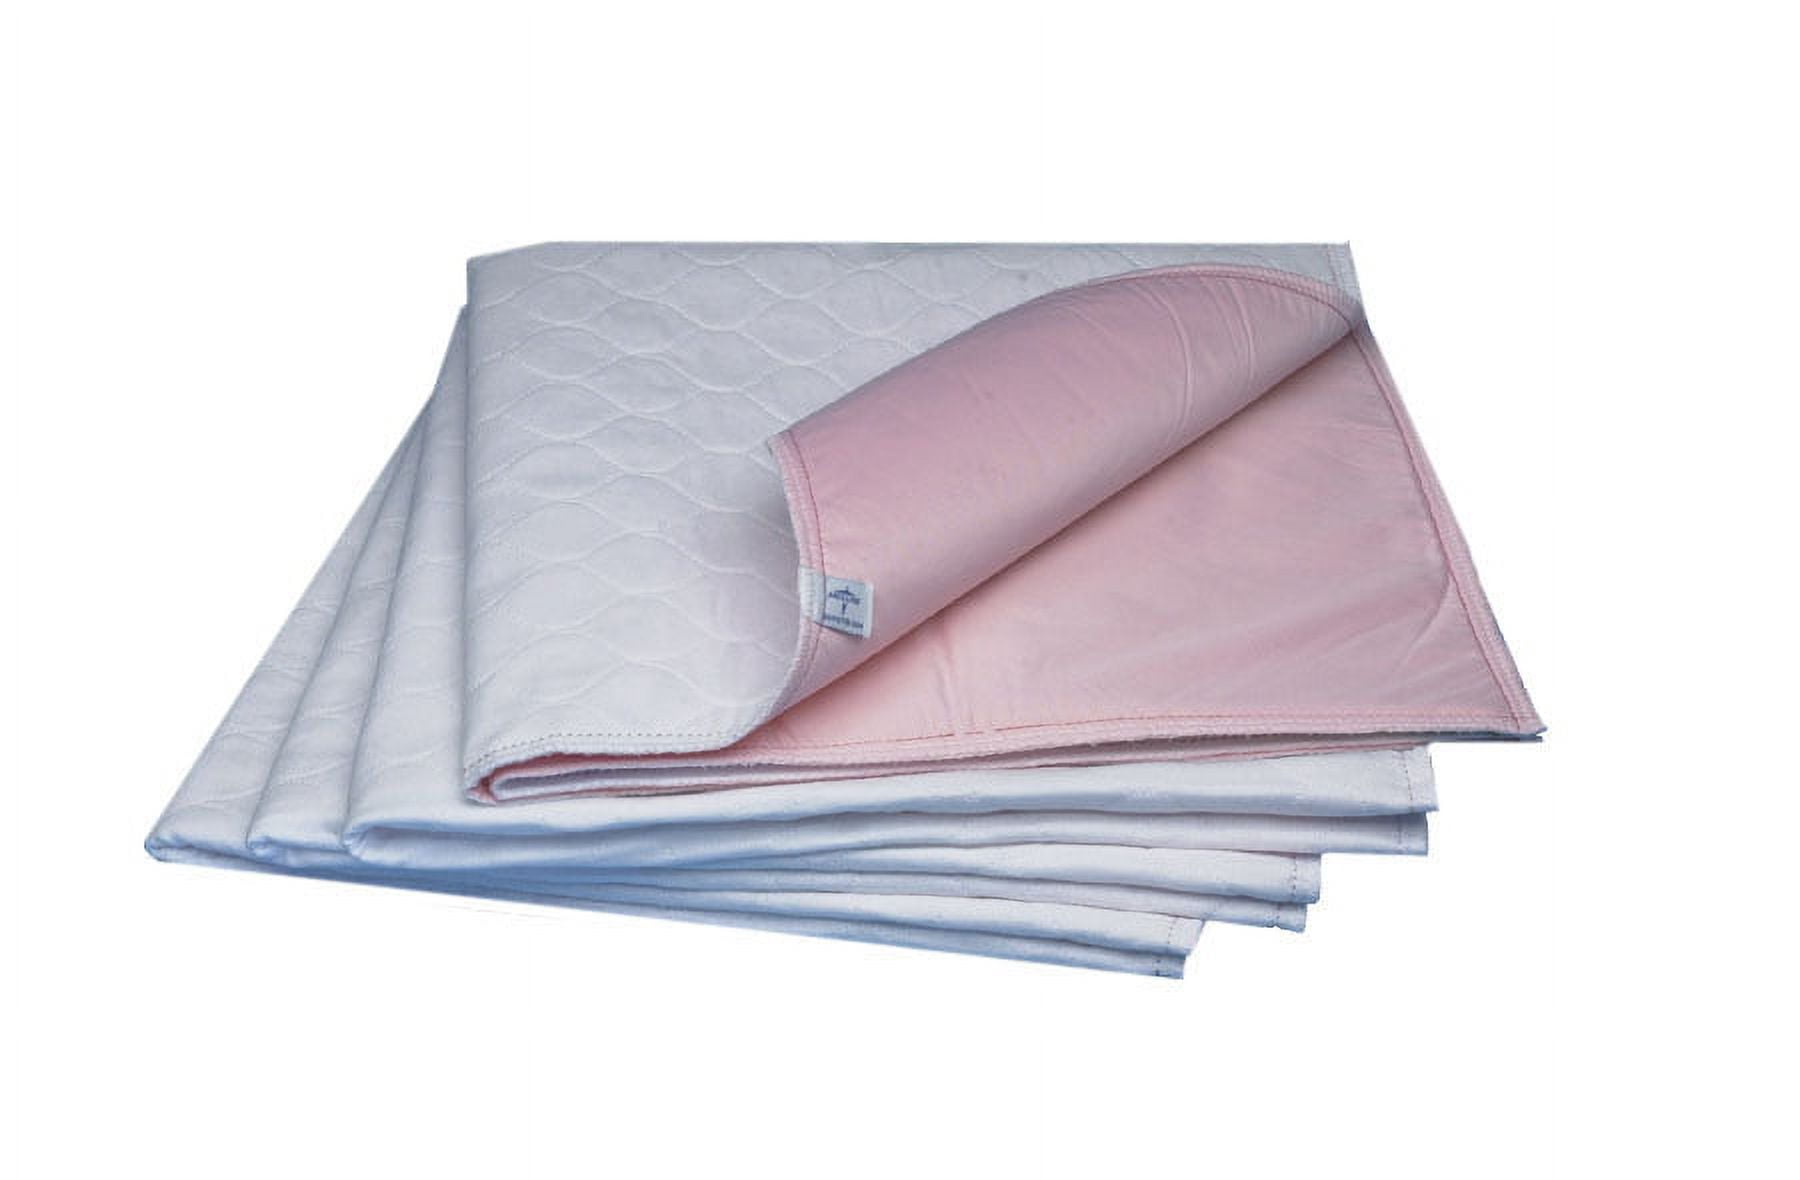 Medline Softnit 300 Reusable & Washable Underpads, 34 x36, Pink, 4 Count  